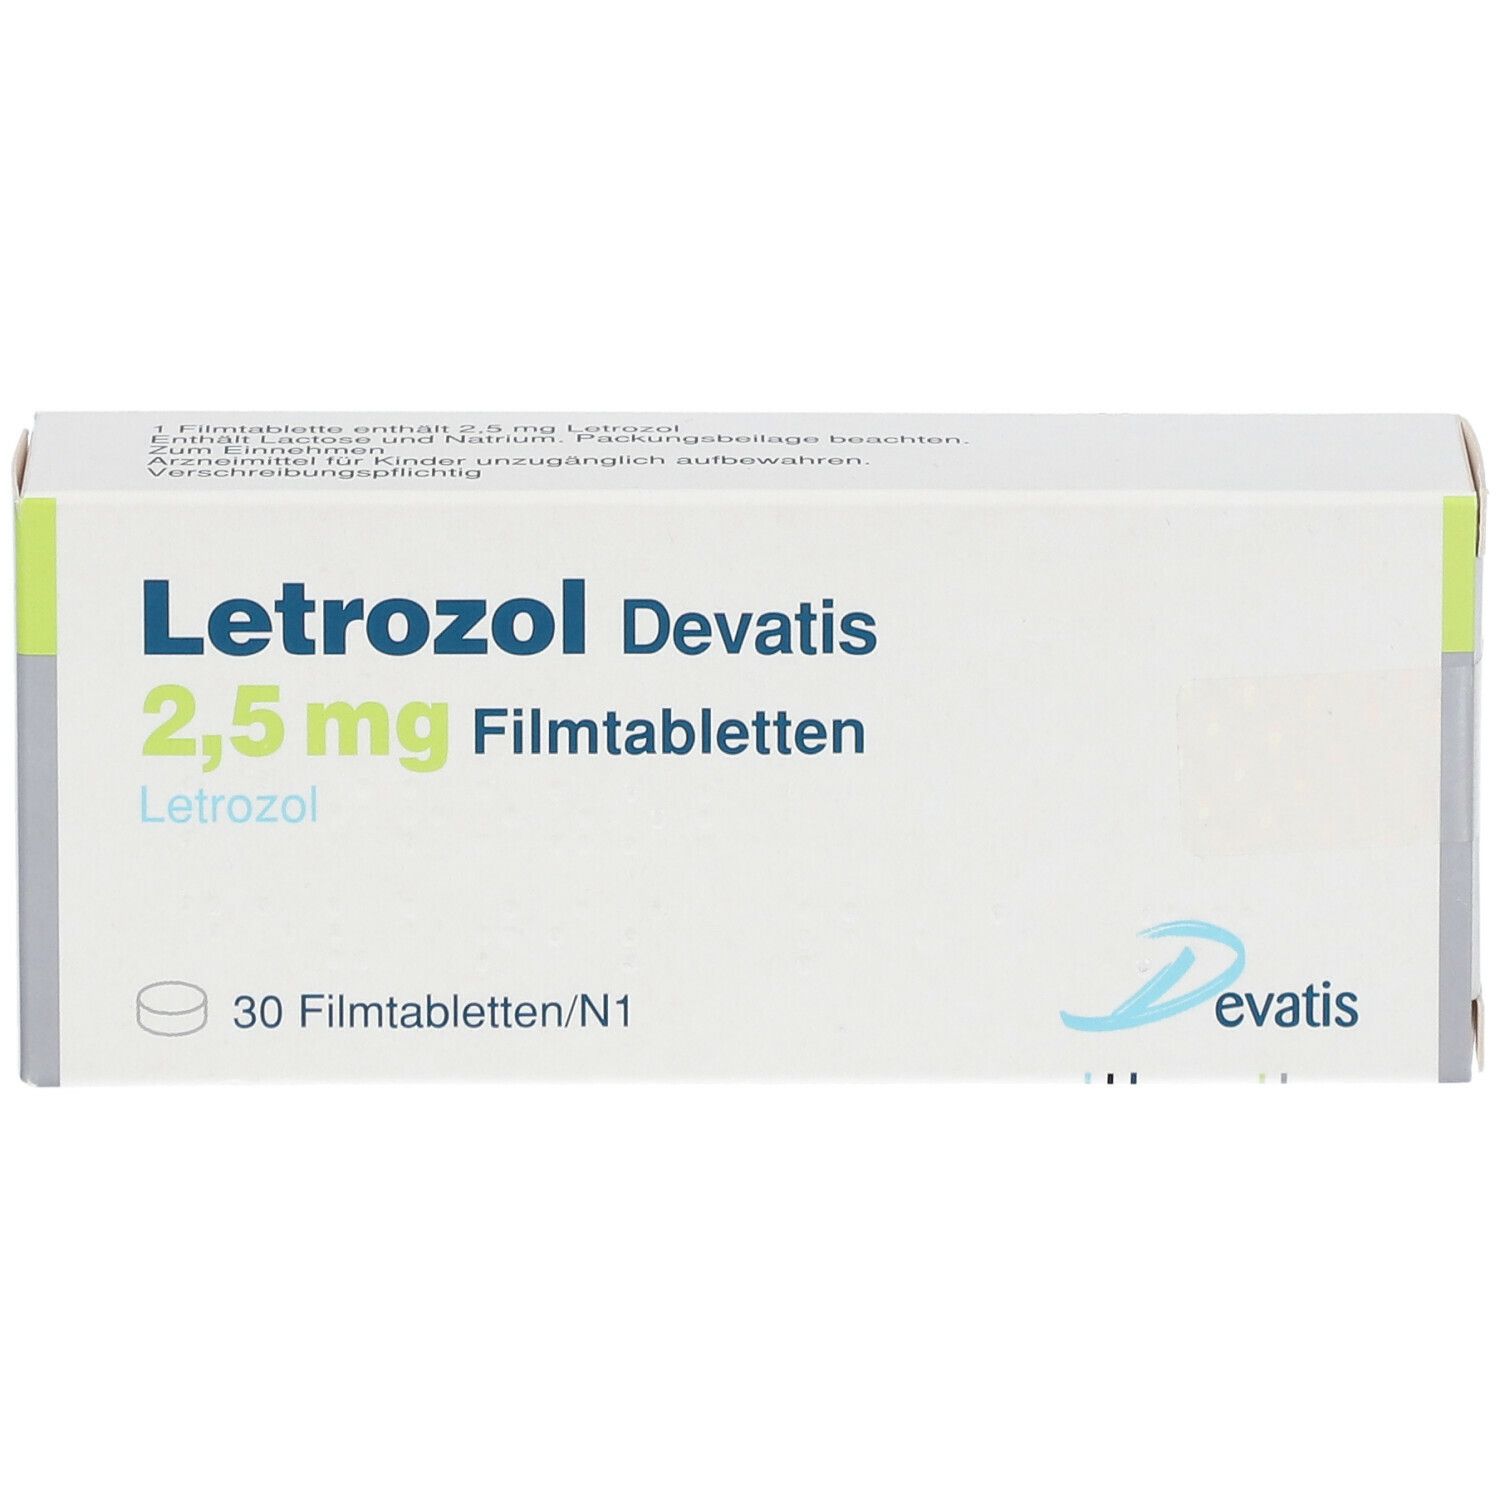 Letrozol Devatis 2,5 mg